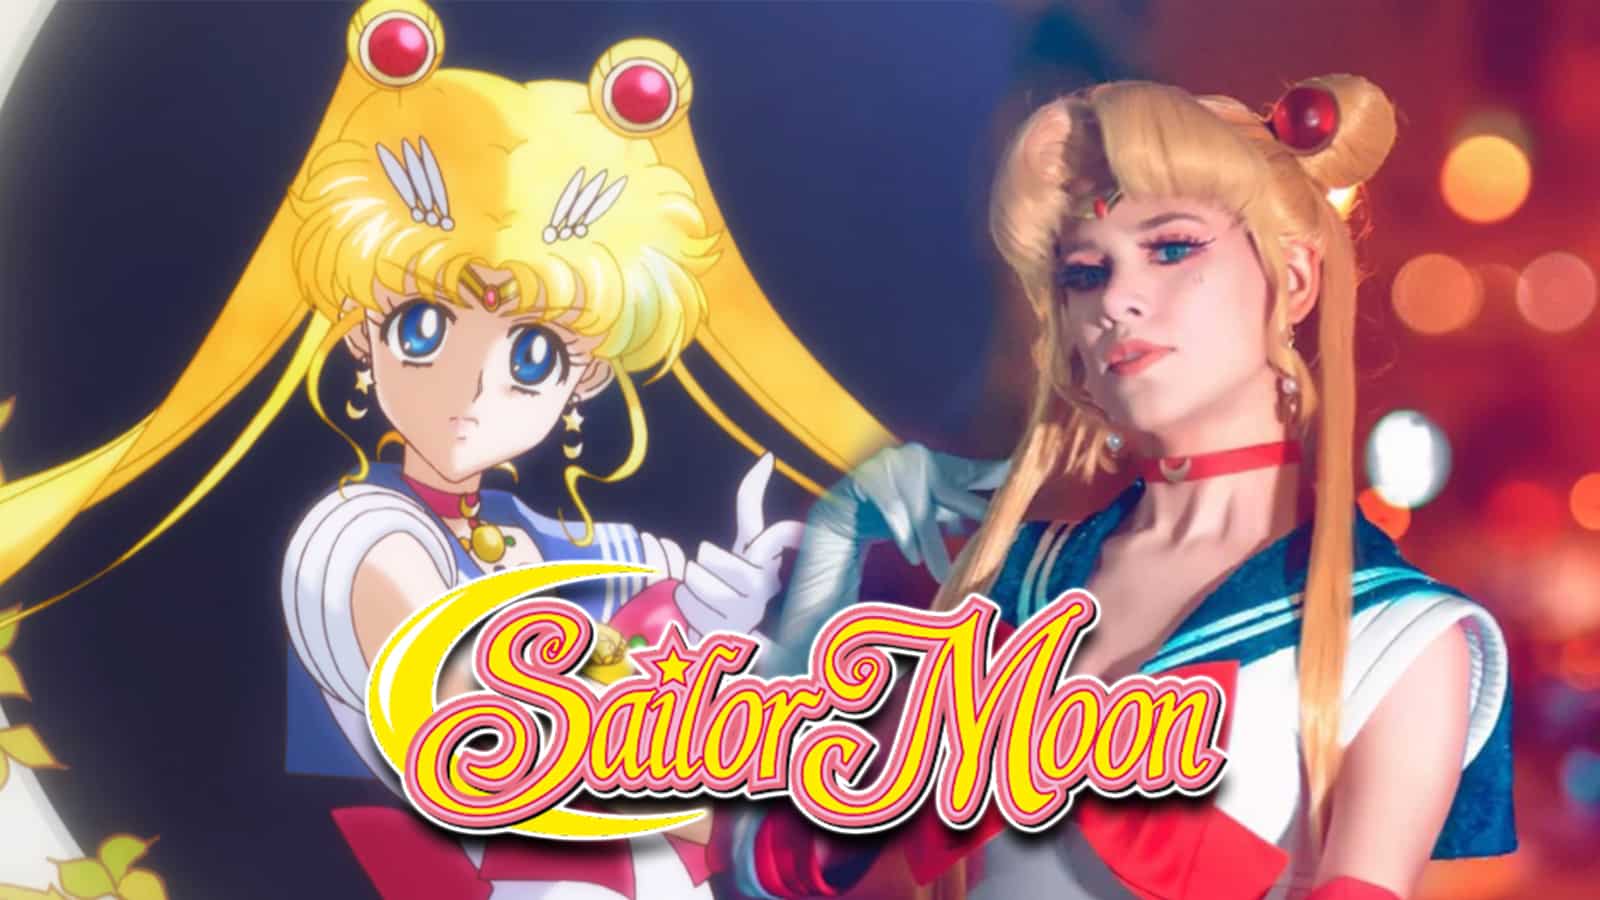 Sailor Moon next to Cosplayer